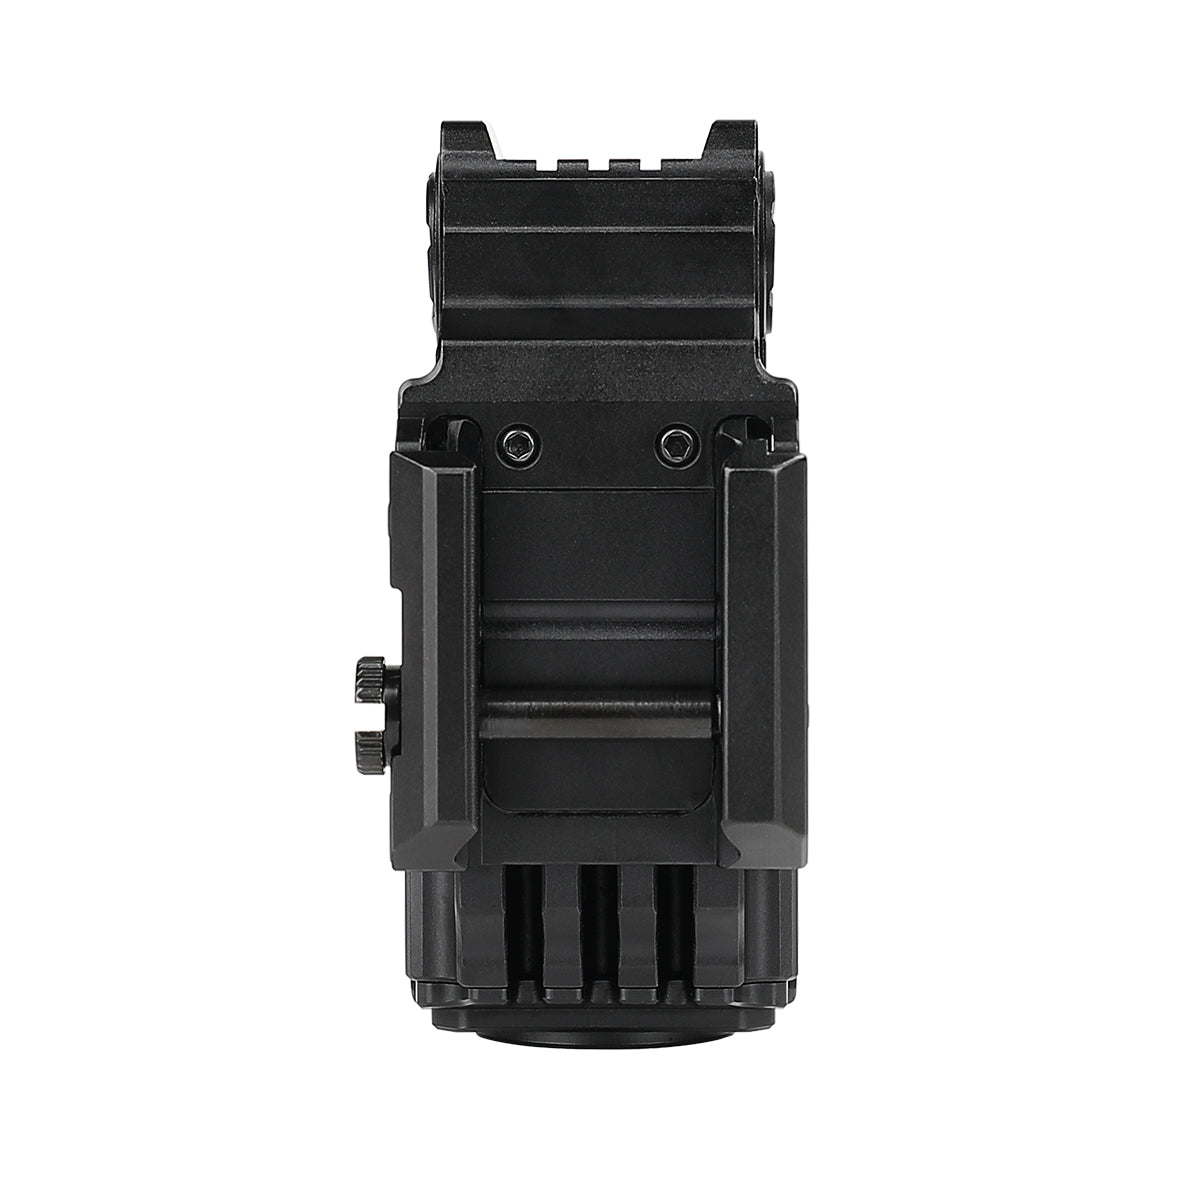 IMALENT UT10 XPL HI 1160lm Hunting Tactical Flashlight For Picatinny Glock Guide Rail